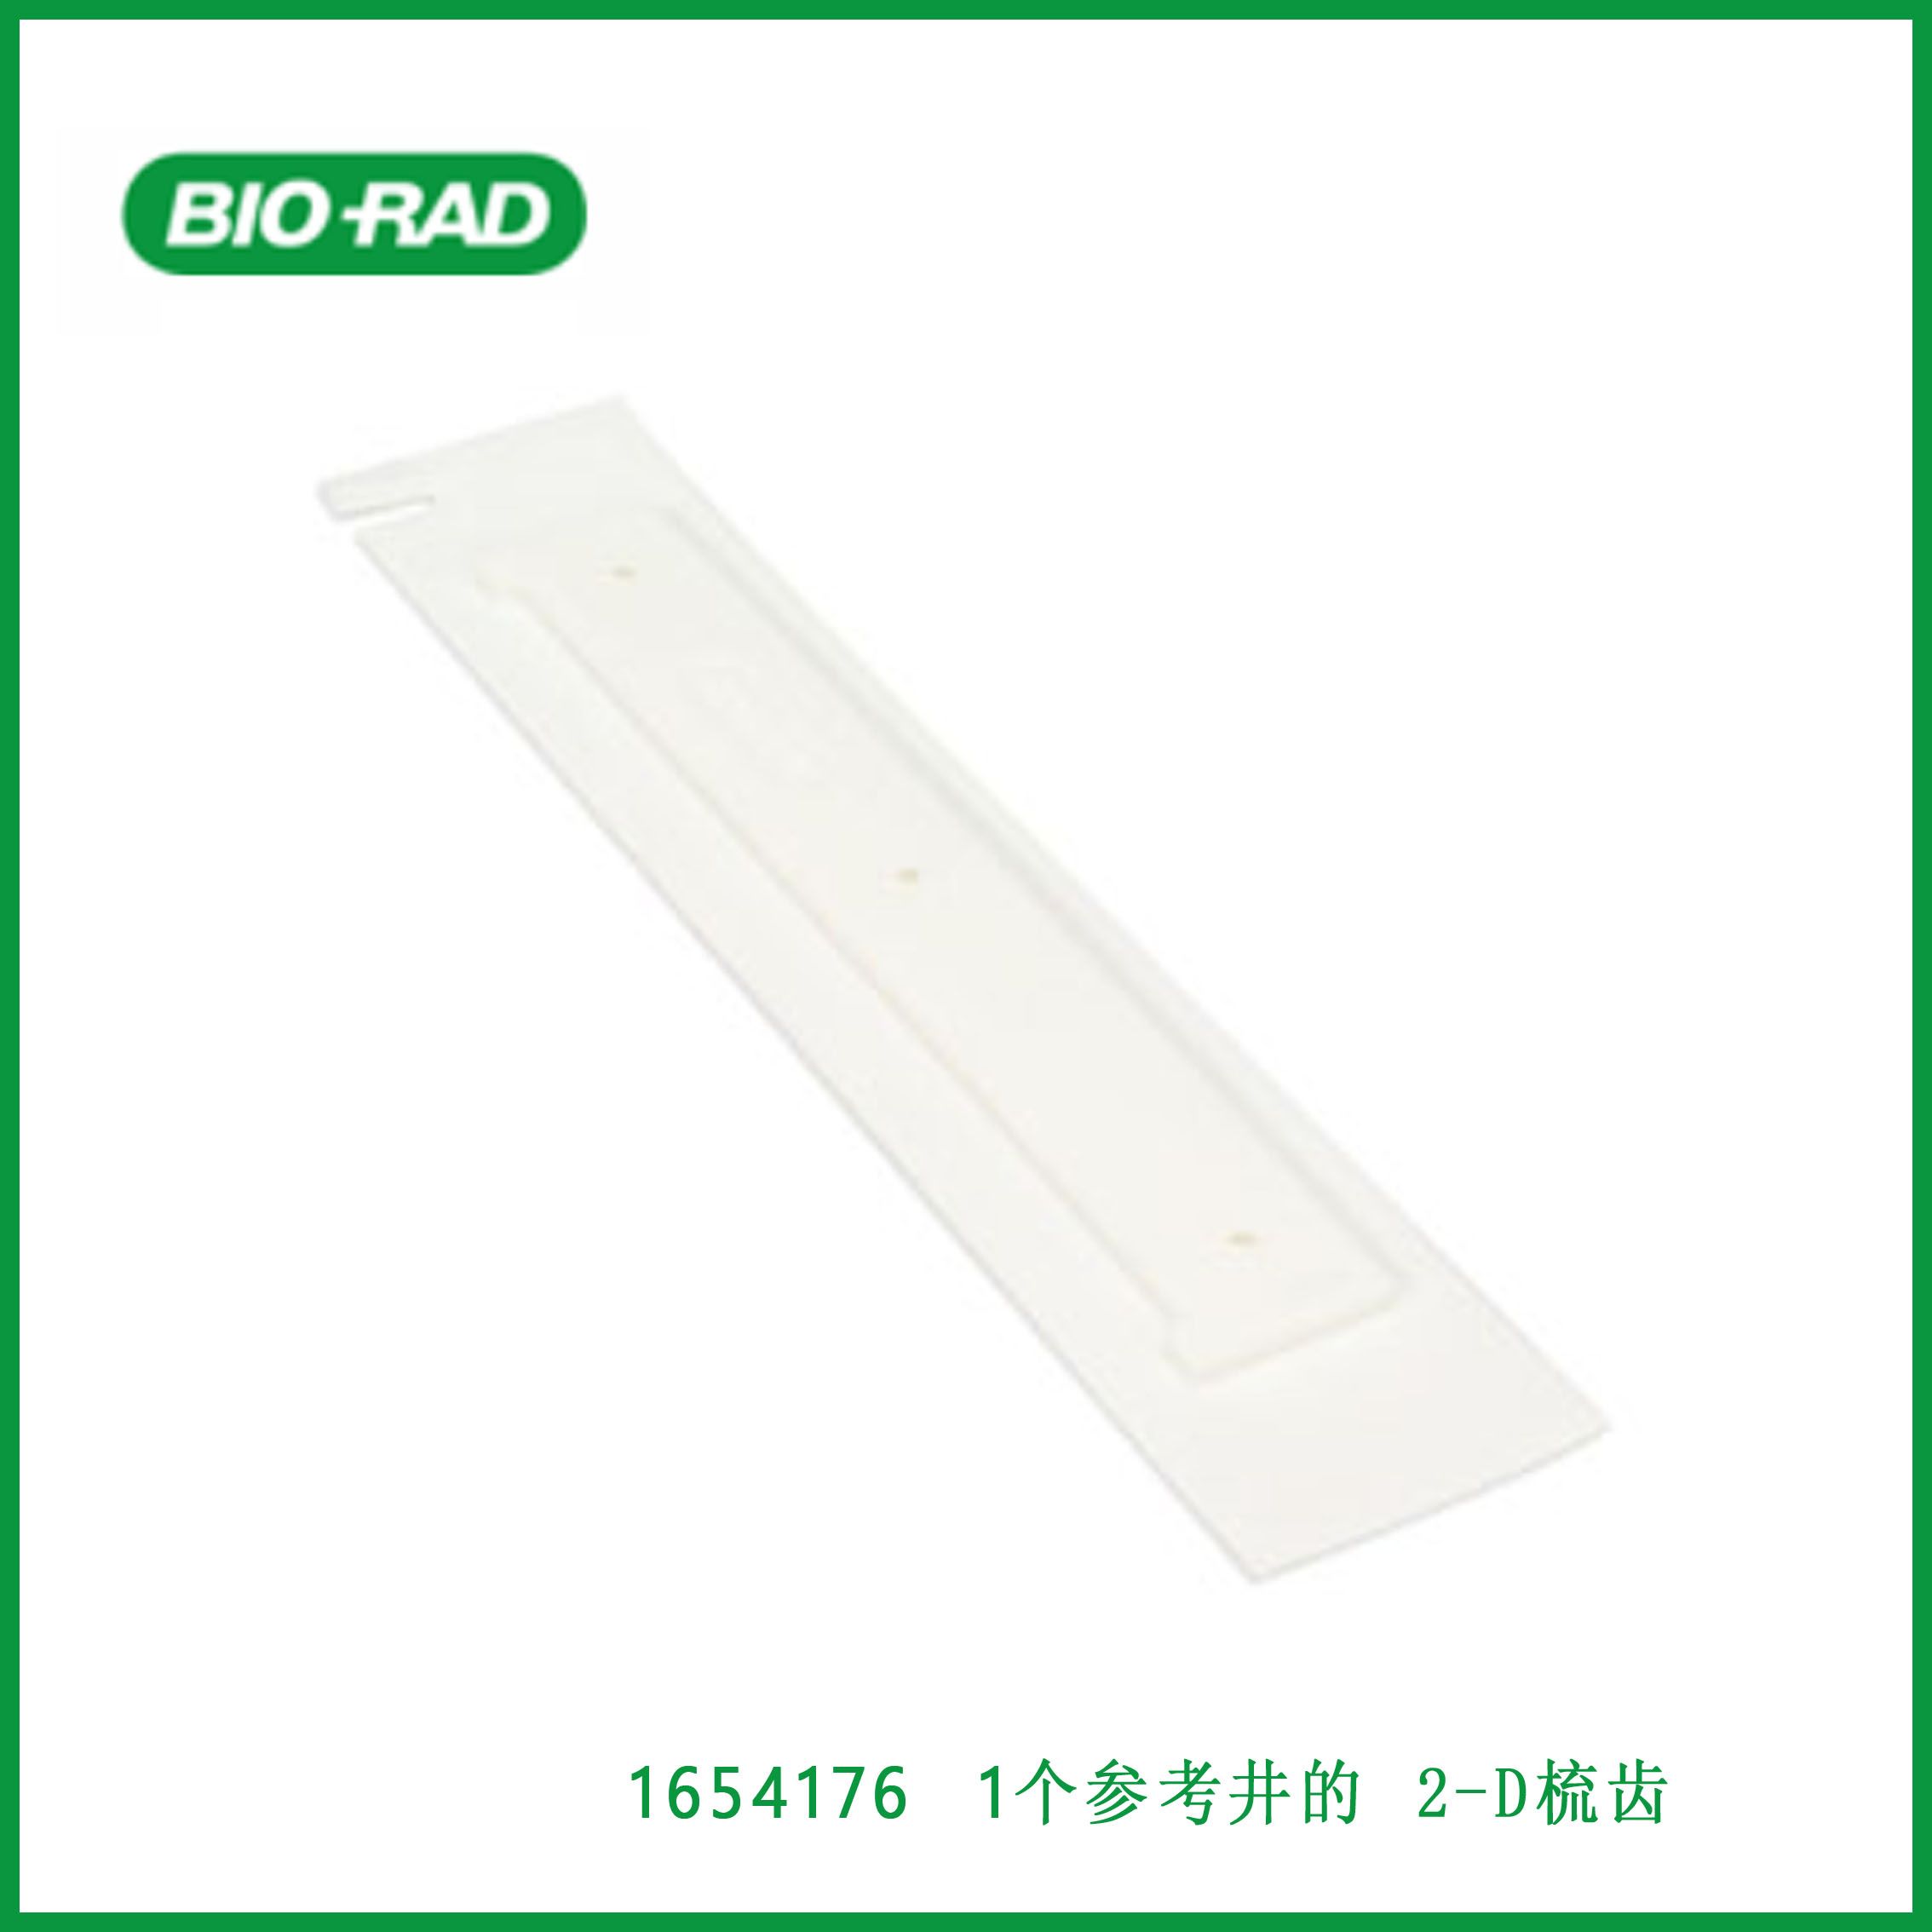 伯乐Bio-Rad16541762-D Comb With 1 Reference Well, 带1个参考井的二维梳齿，现货